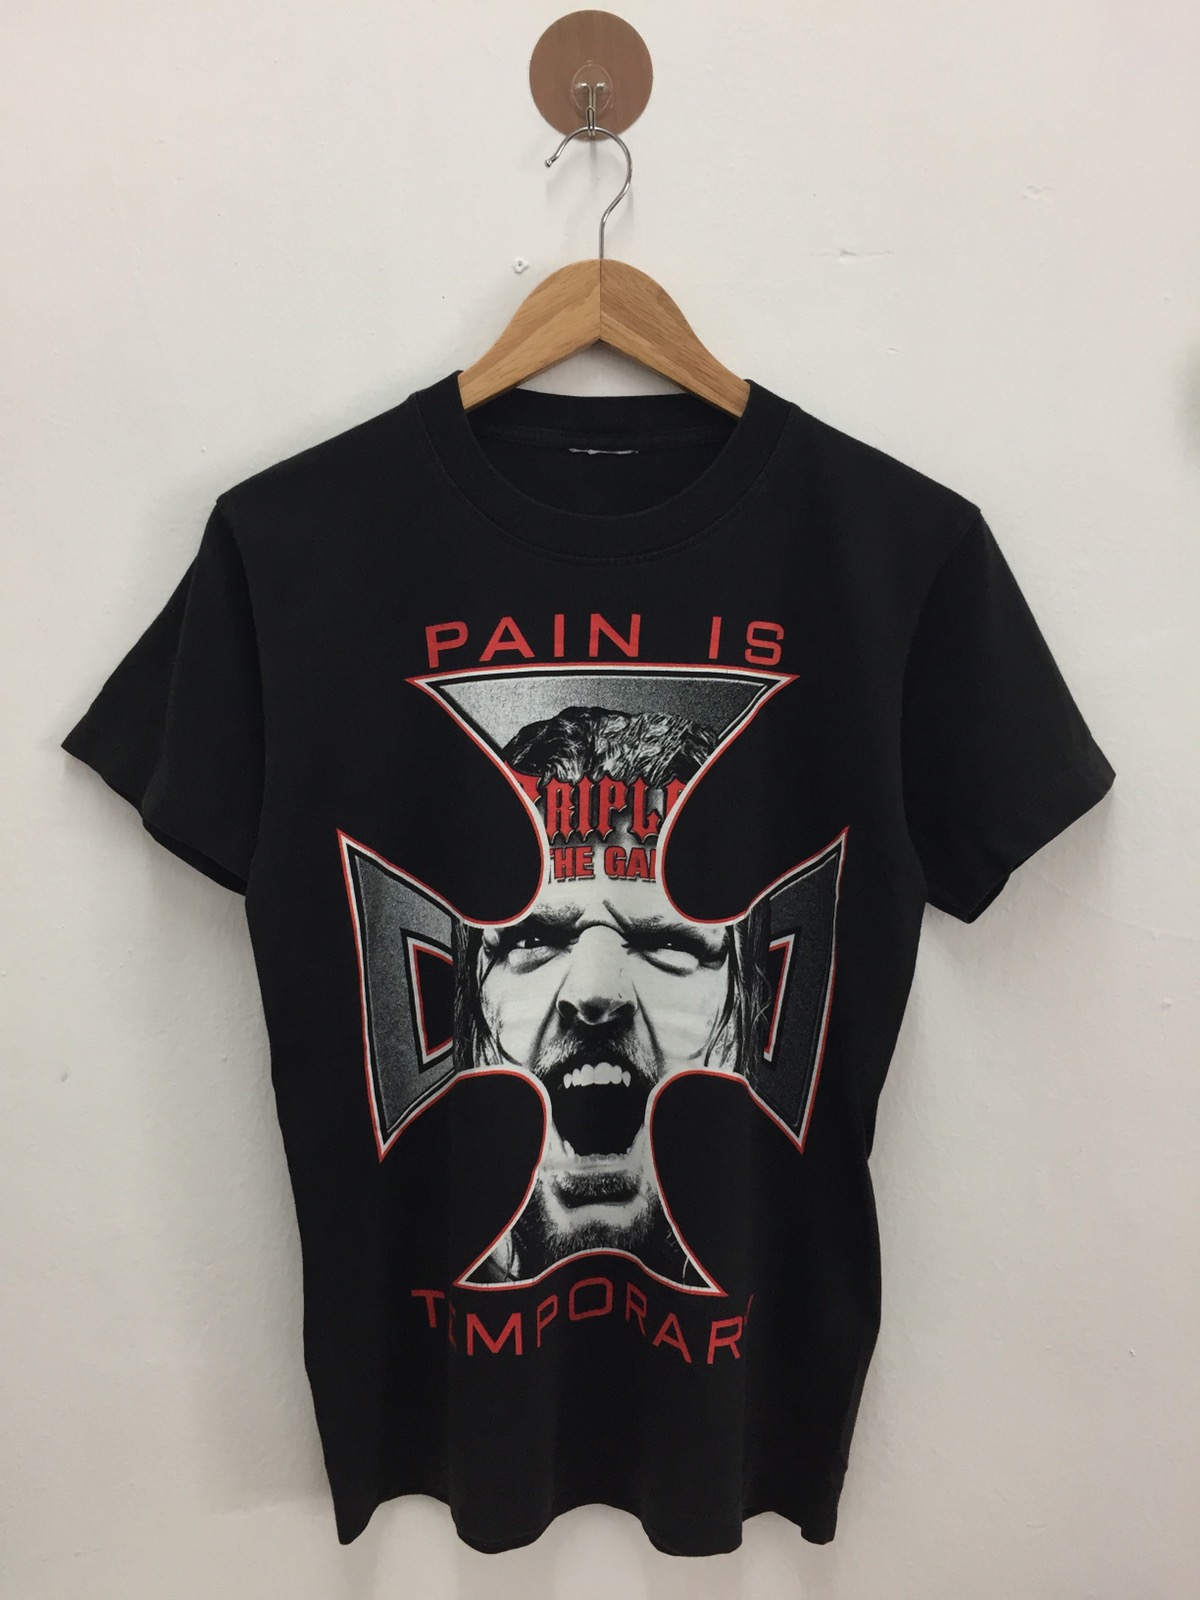 Vintage - Vintage Pro Wrestler Triphle H “Pain Is Temporary” Shirt - 1